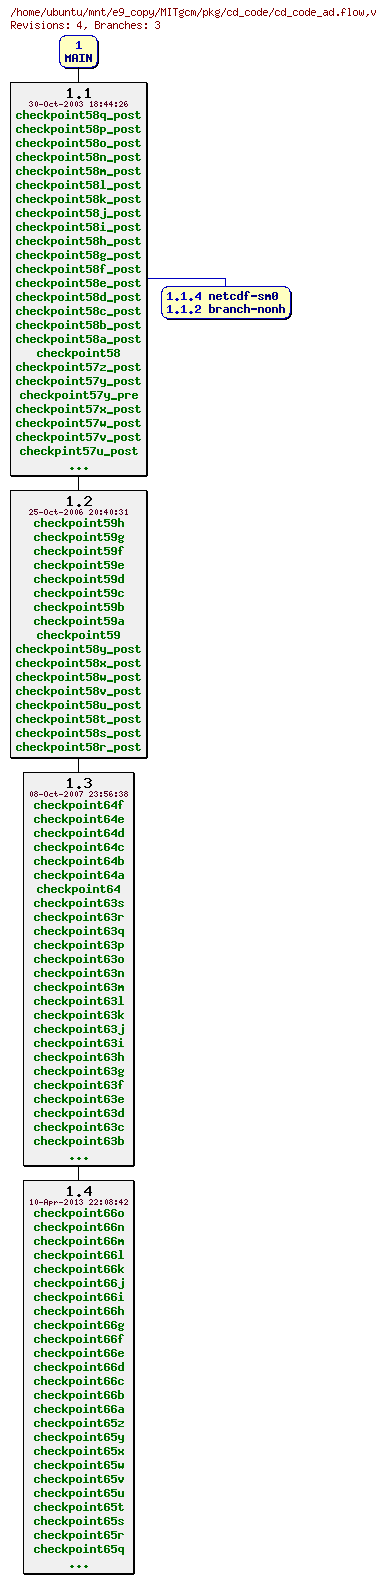 Revisions of MITgcm/pkg/cd_code/cd_code_ad.flow